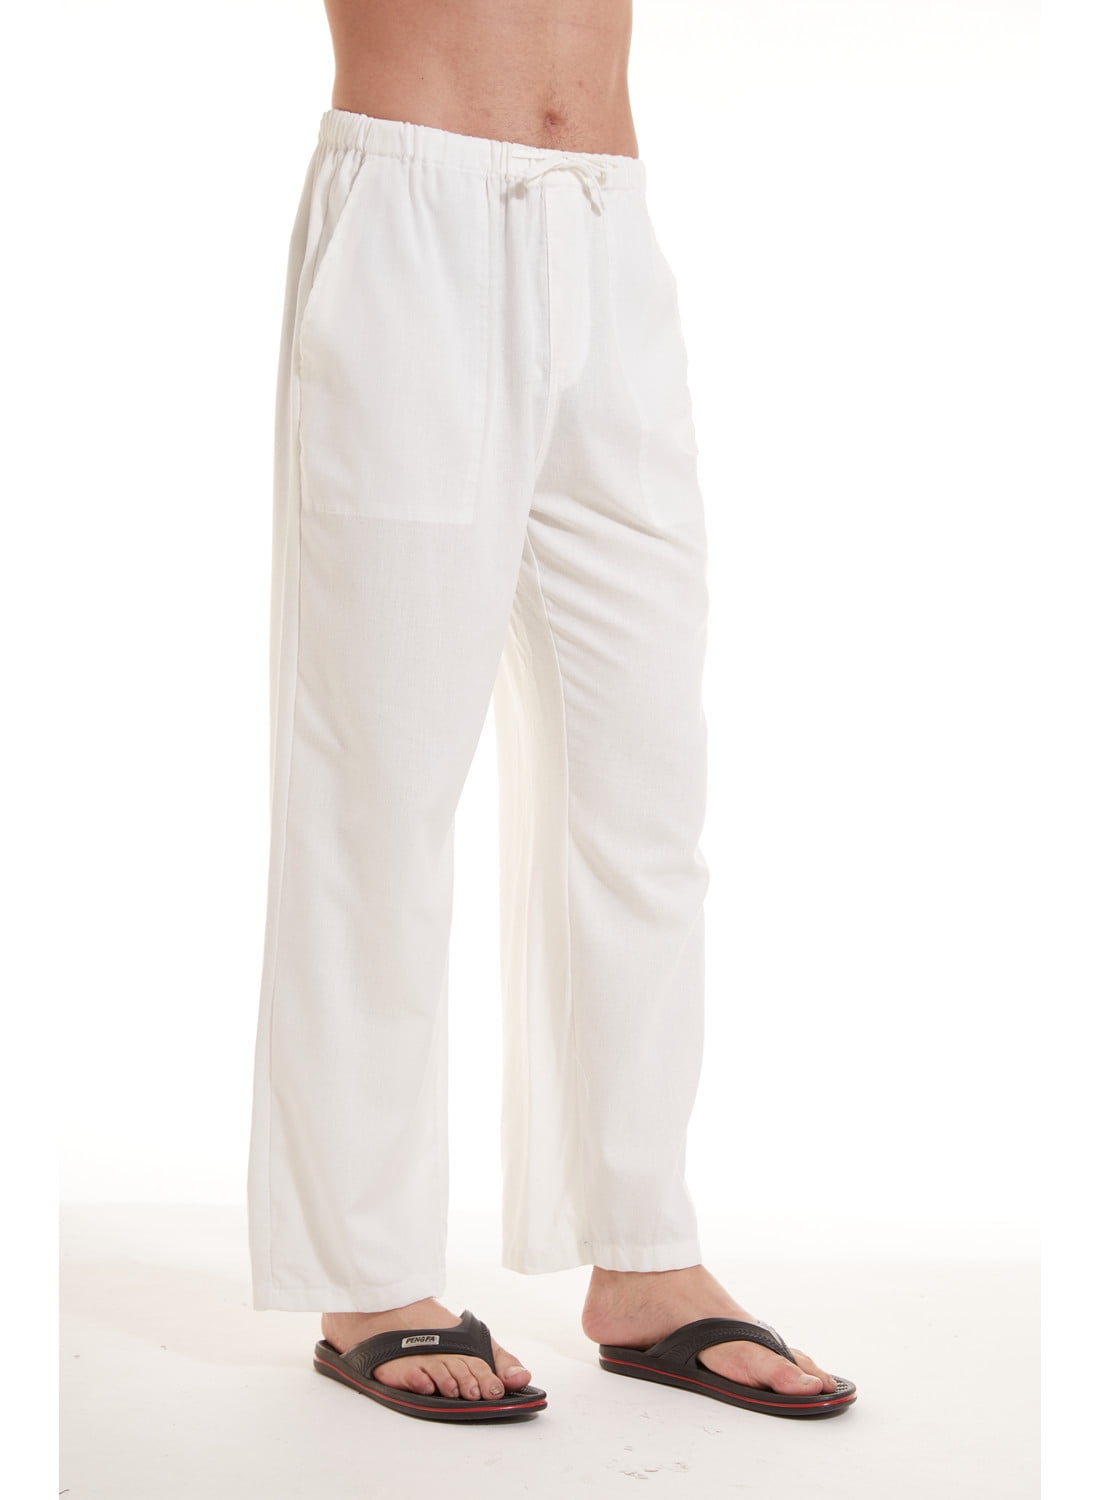 PASLTER Mens Casual Linen Pants Loose Fit Elastic Drawstring Waist  Straight-Legs Summer Yoga Beach Long Pants